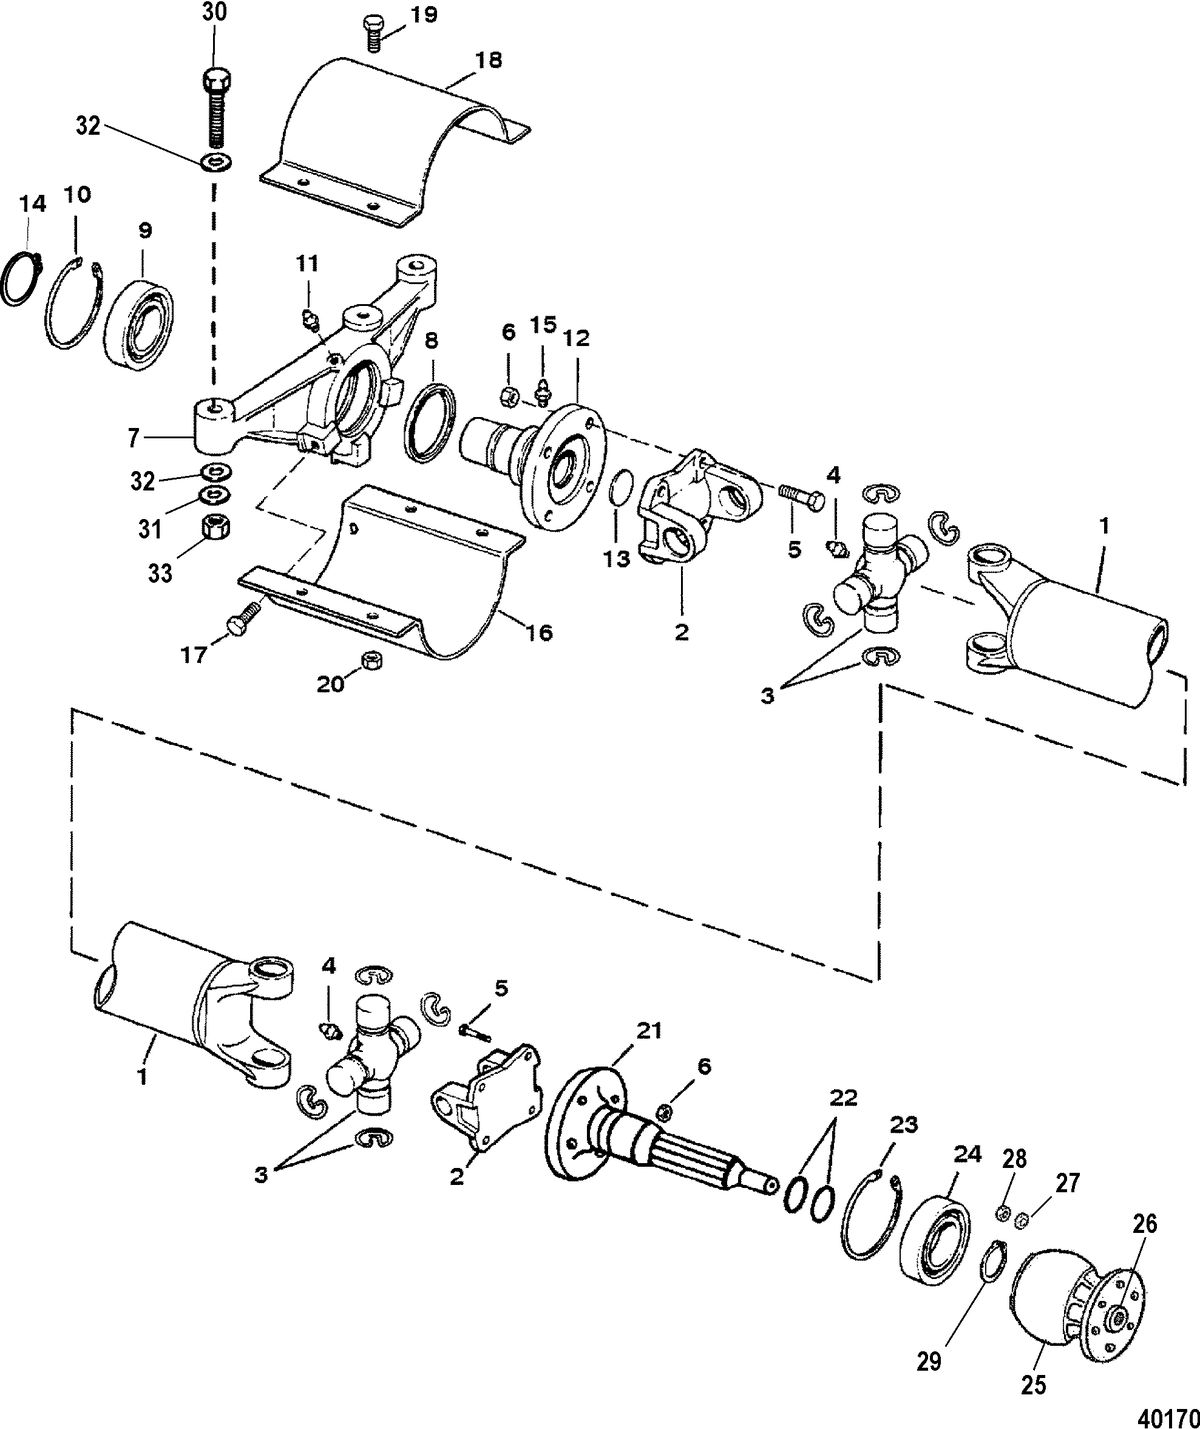 MERCRUISER 260 ENGINE (G.M.) DRIVE SHAFT EXTENSION COMPONENTS(M0061-G8)